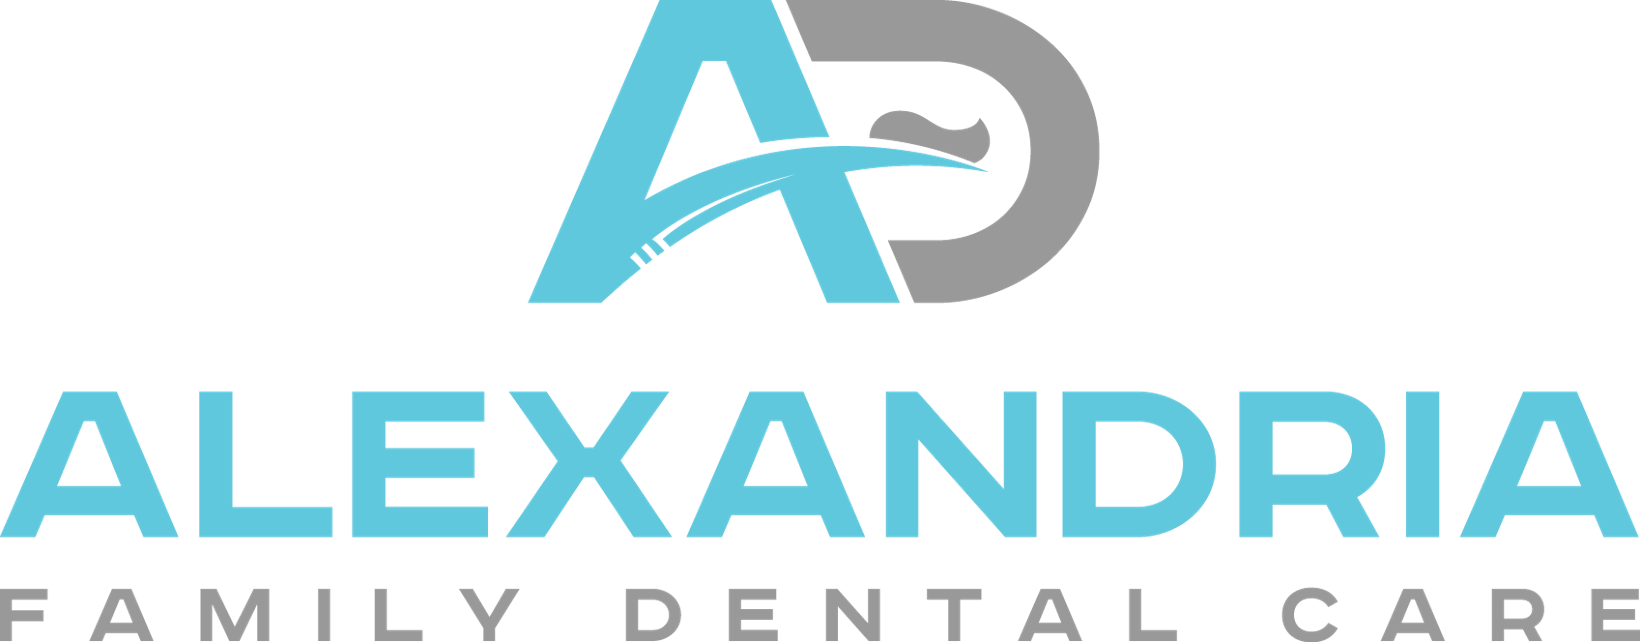 Link to Alexandria Family Dental Care home page